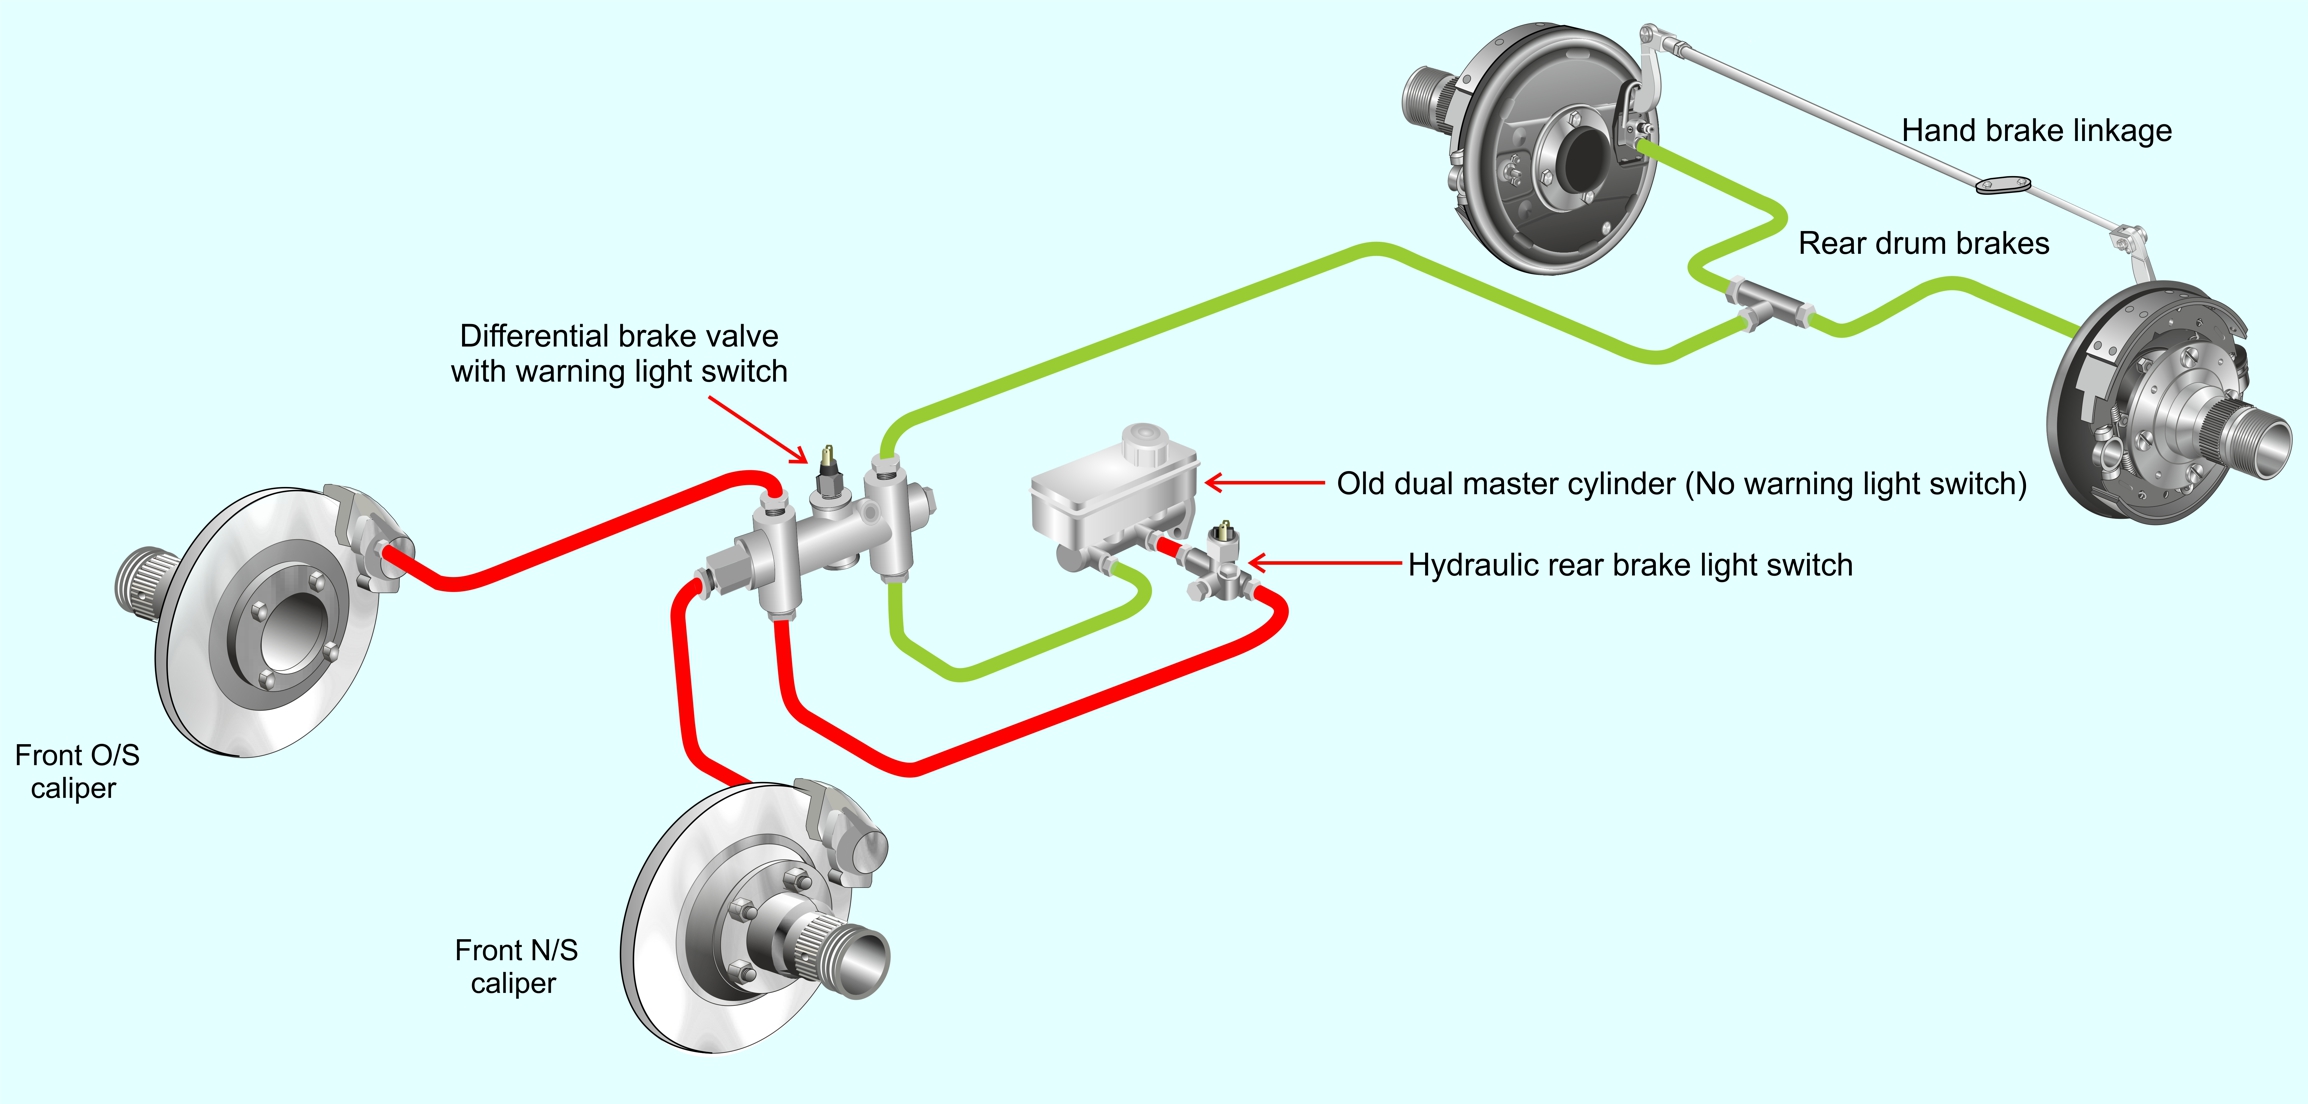 Old Hydraulic brake layout